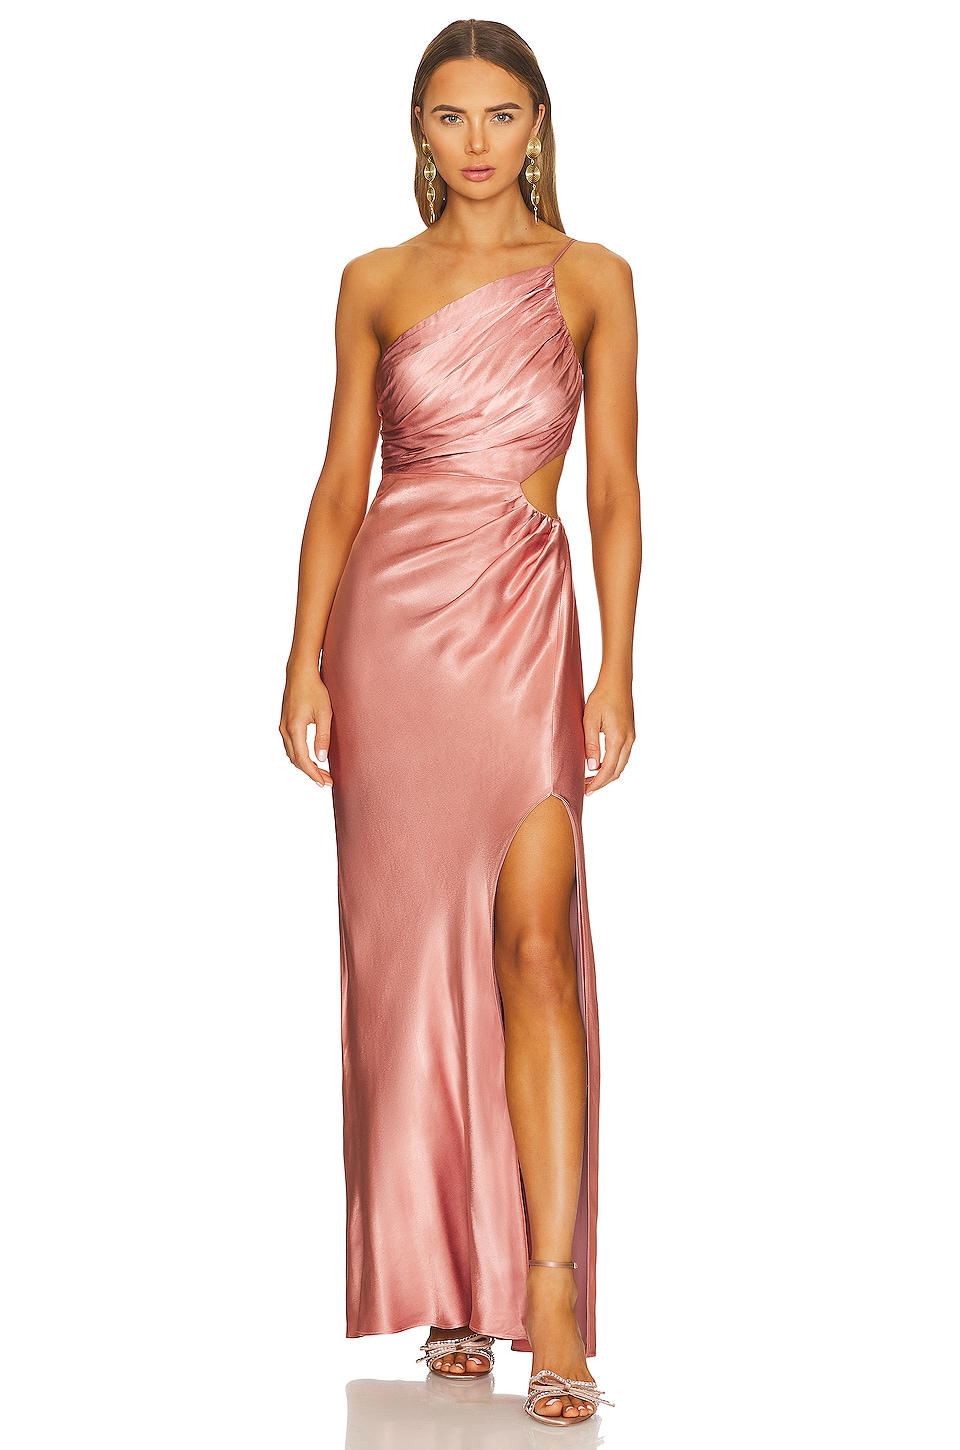 Shona Joy Pink Dress, Designer Collection